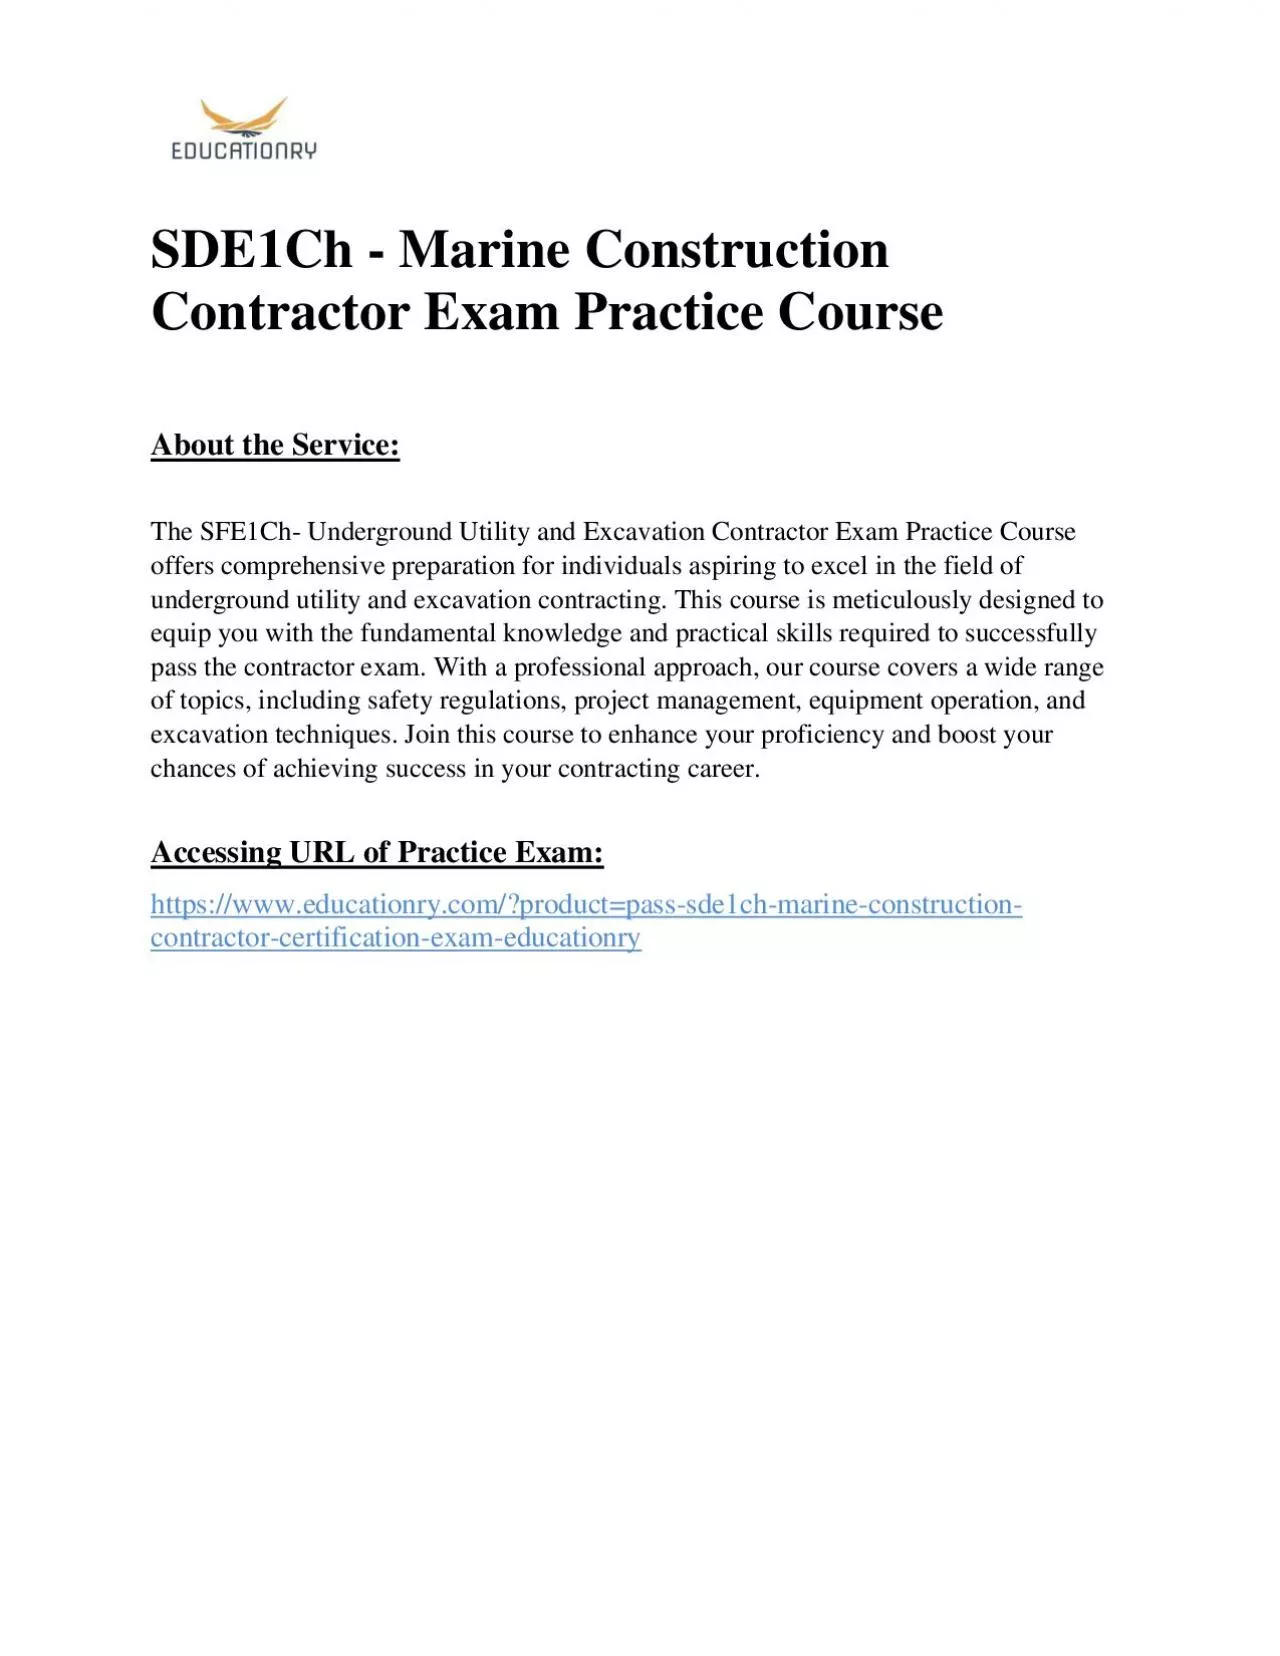 SDE1Ch - Marine Construction Contractor Exam Practice Course